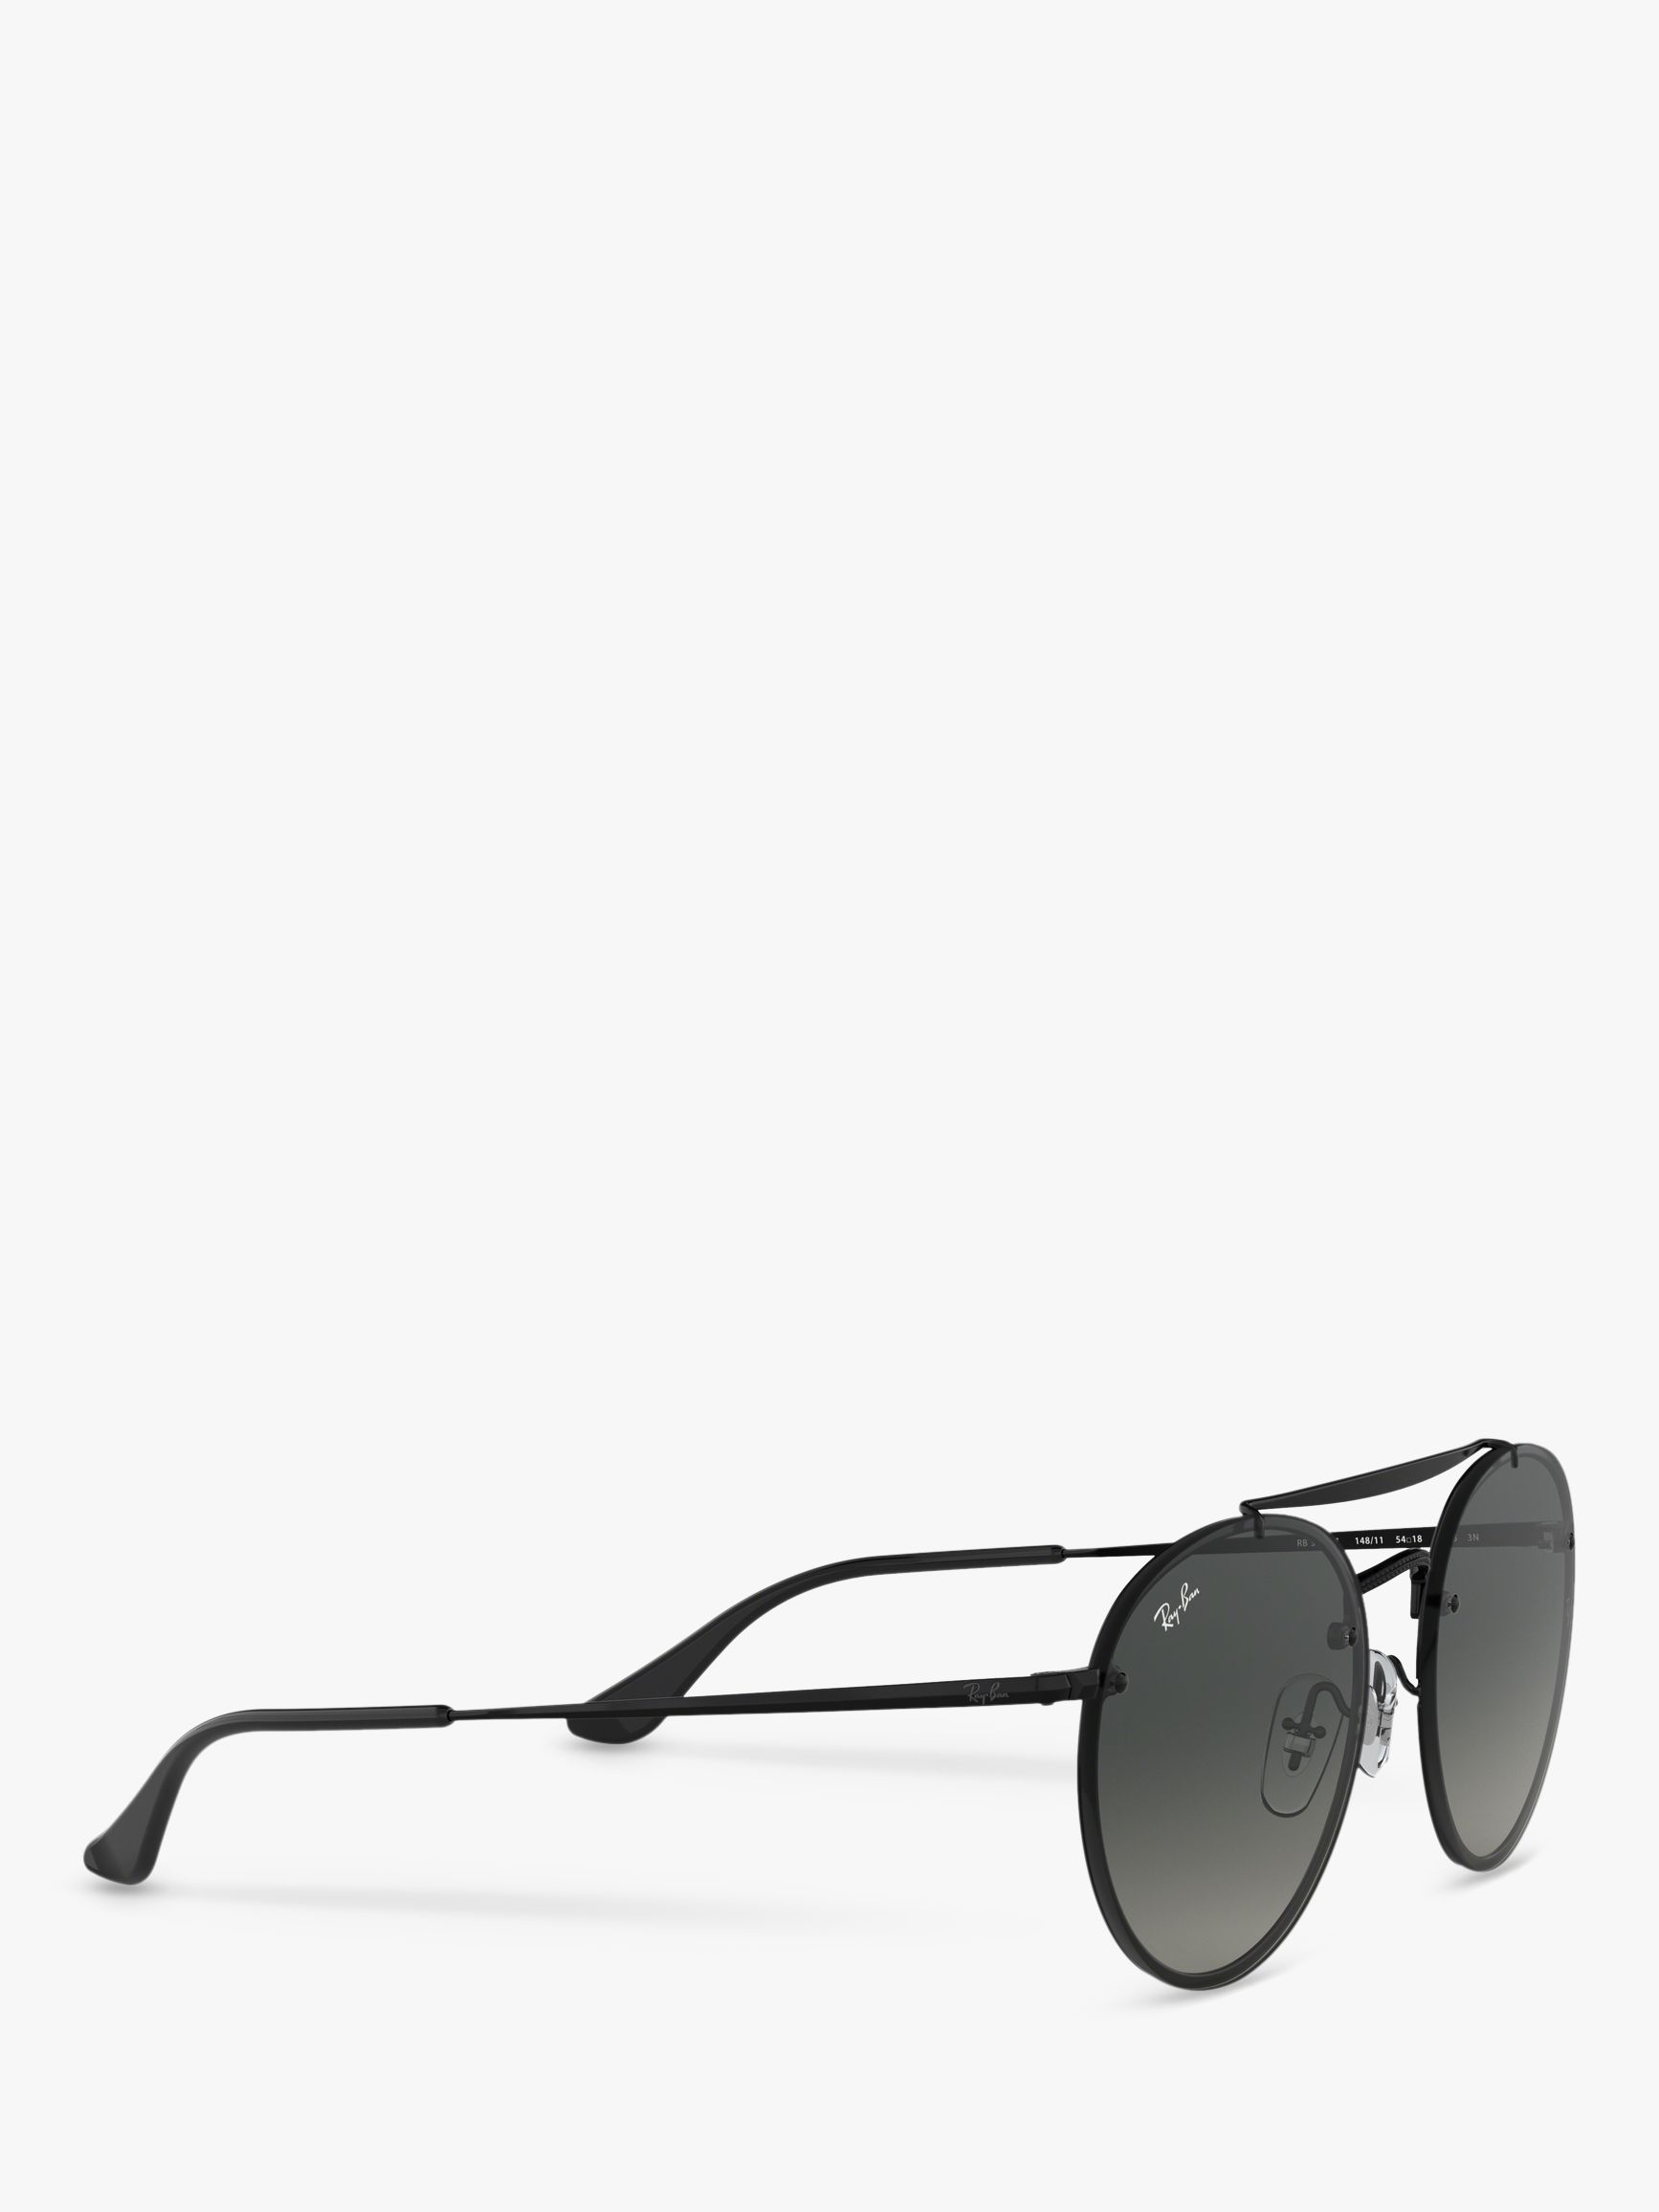 Ray-Ban RB3614N Women's Oval Sunglasses, Black/Grey Gradient